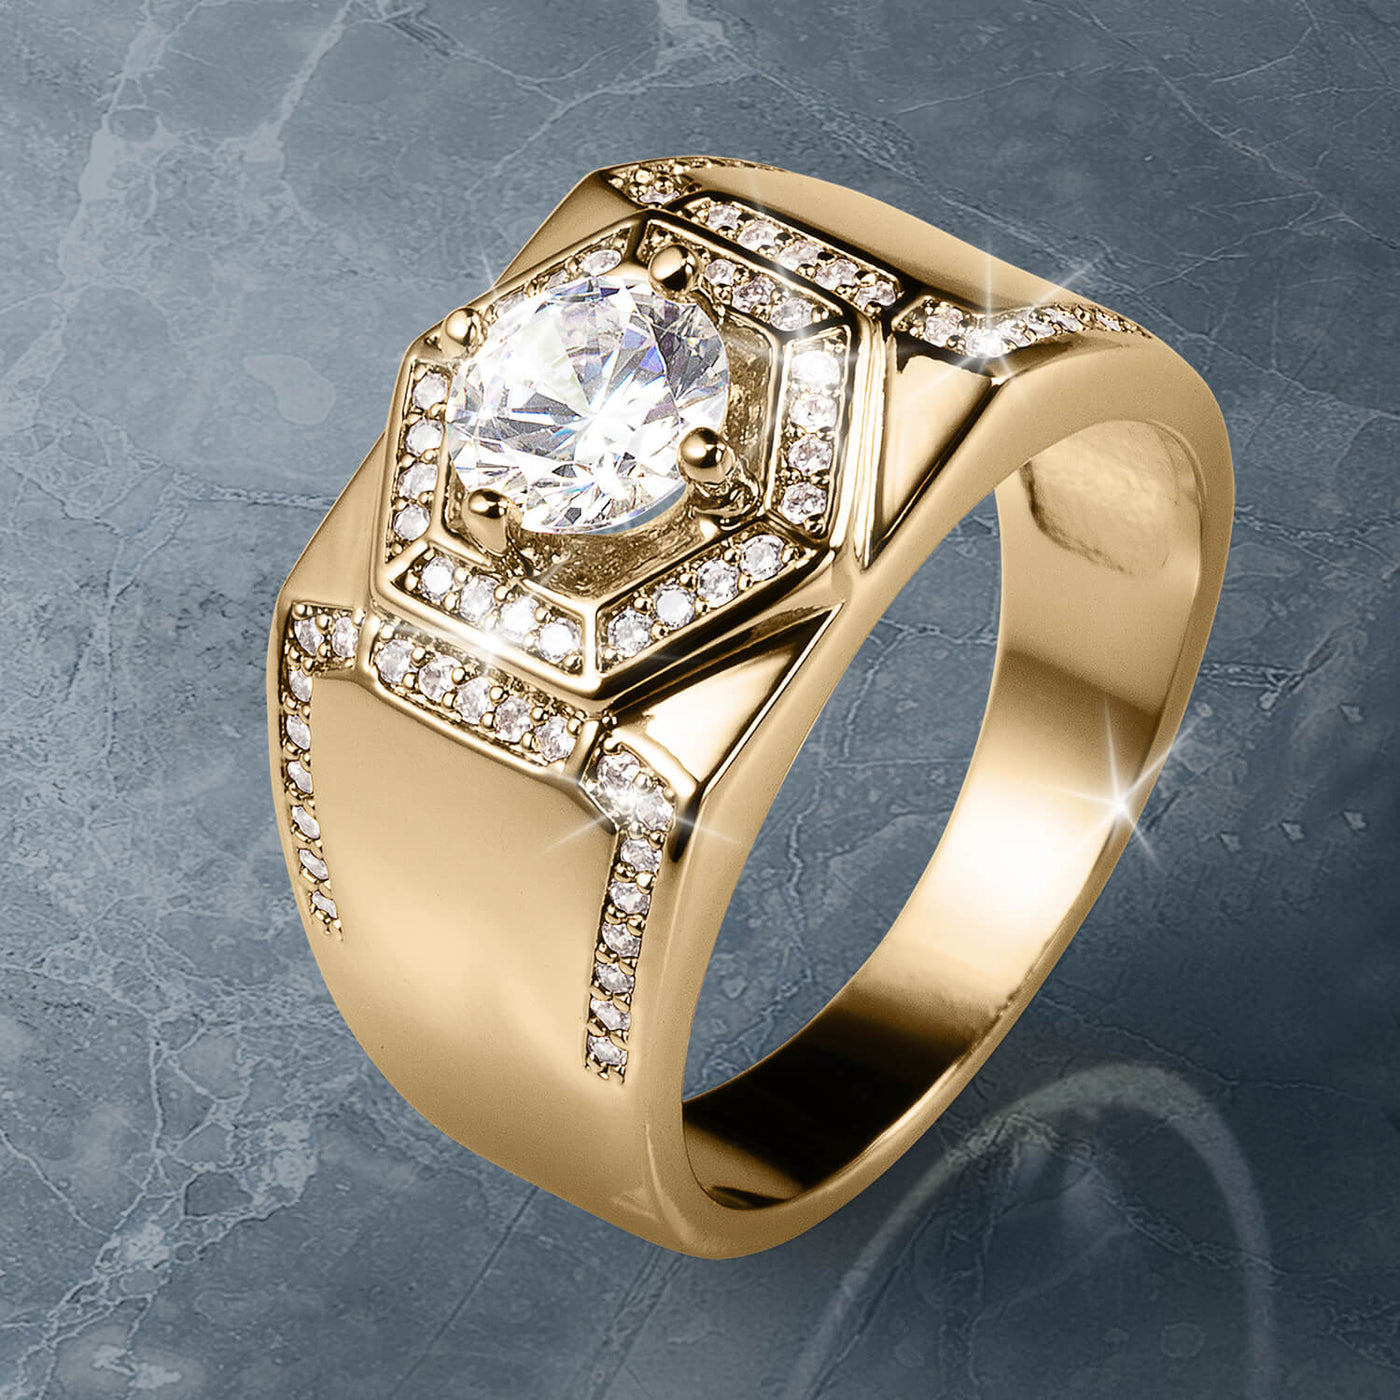 Daniel Steiger Refined Legacy Gold Ring